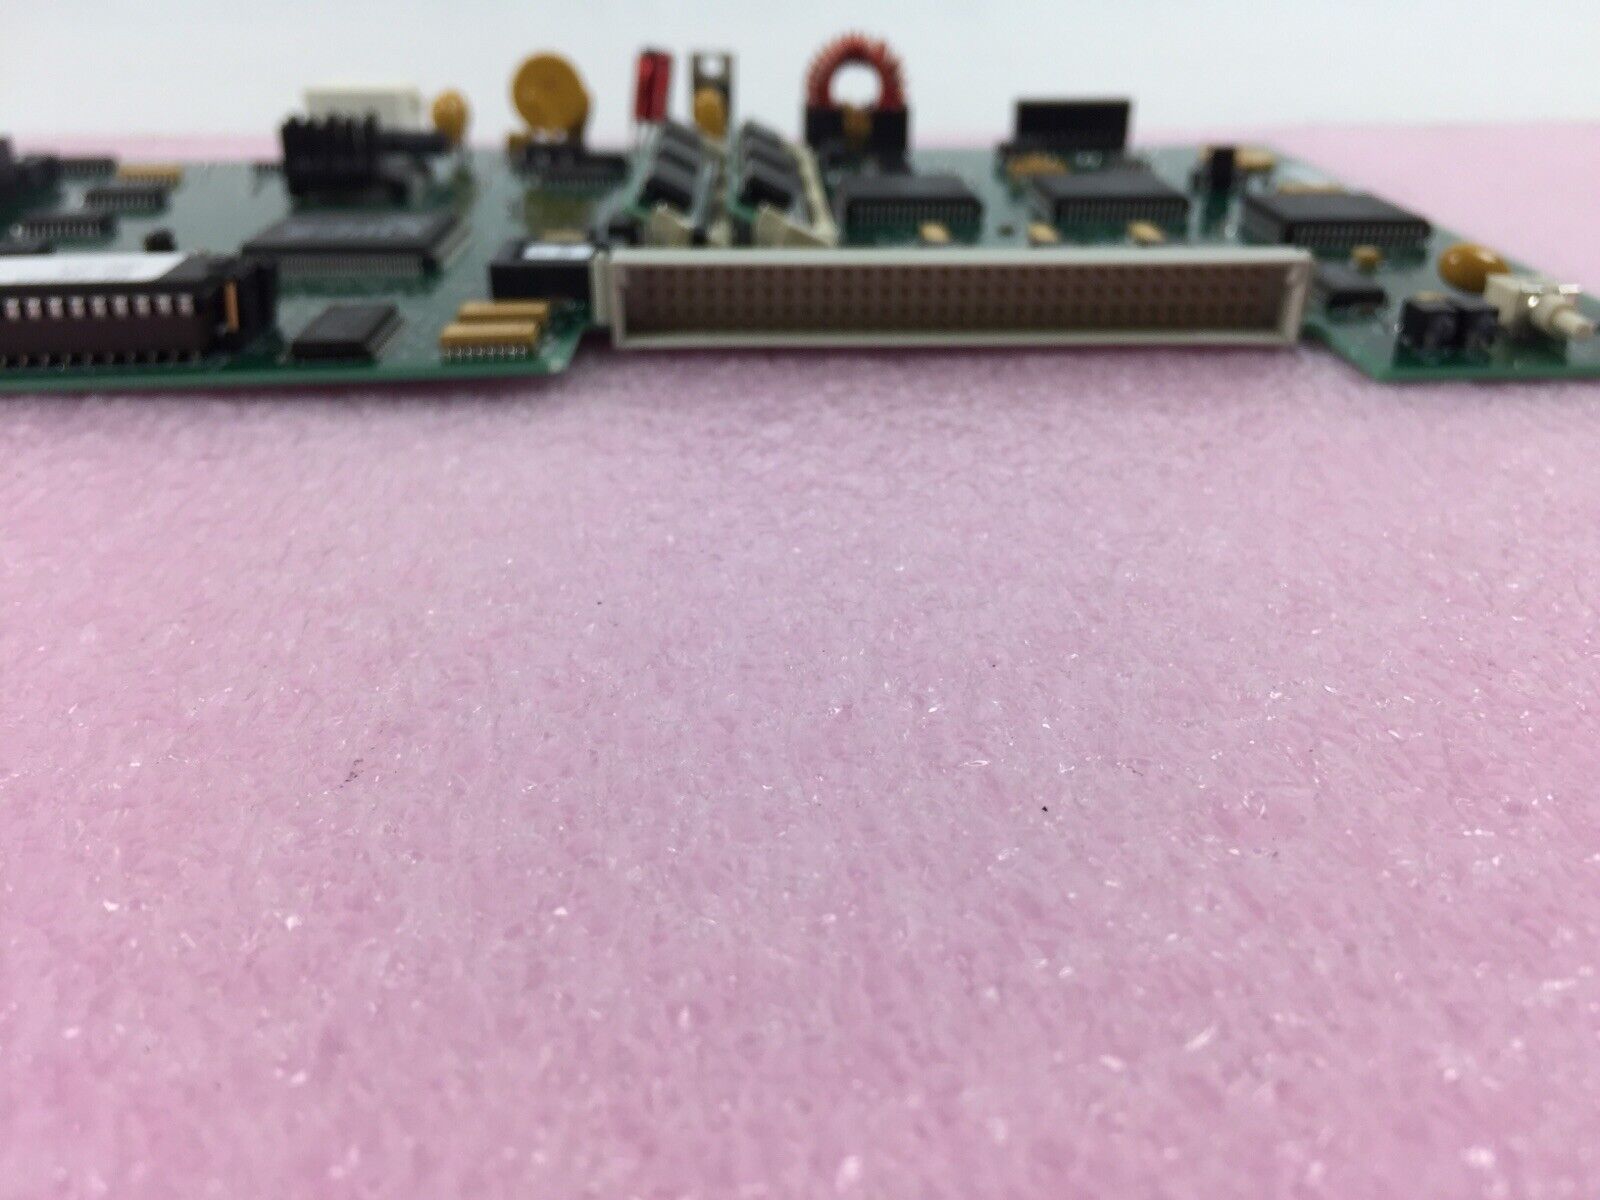 Circuit Board - Chips B0915X-01XX 9546 F82C836 - 609260 - REV AA - Untested